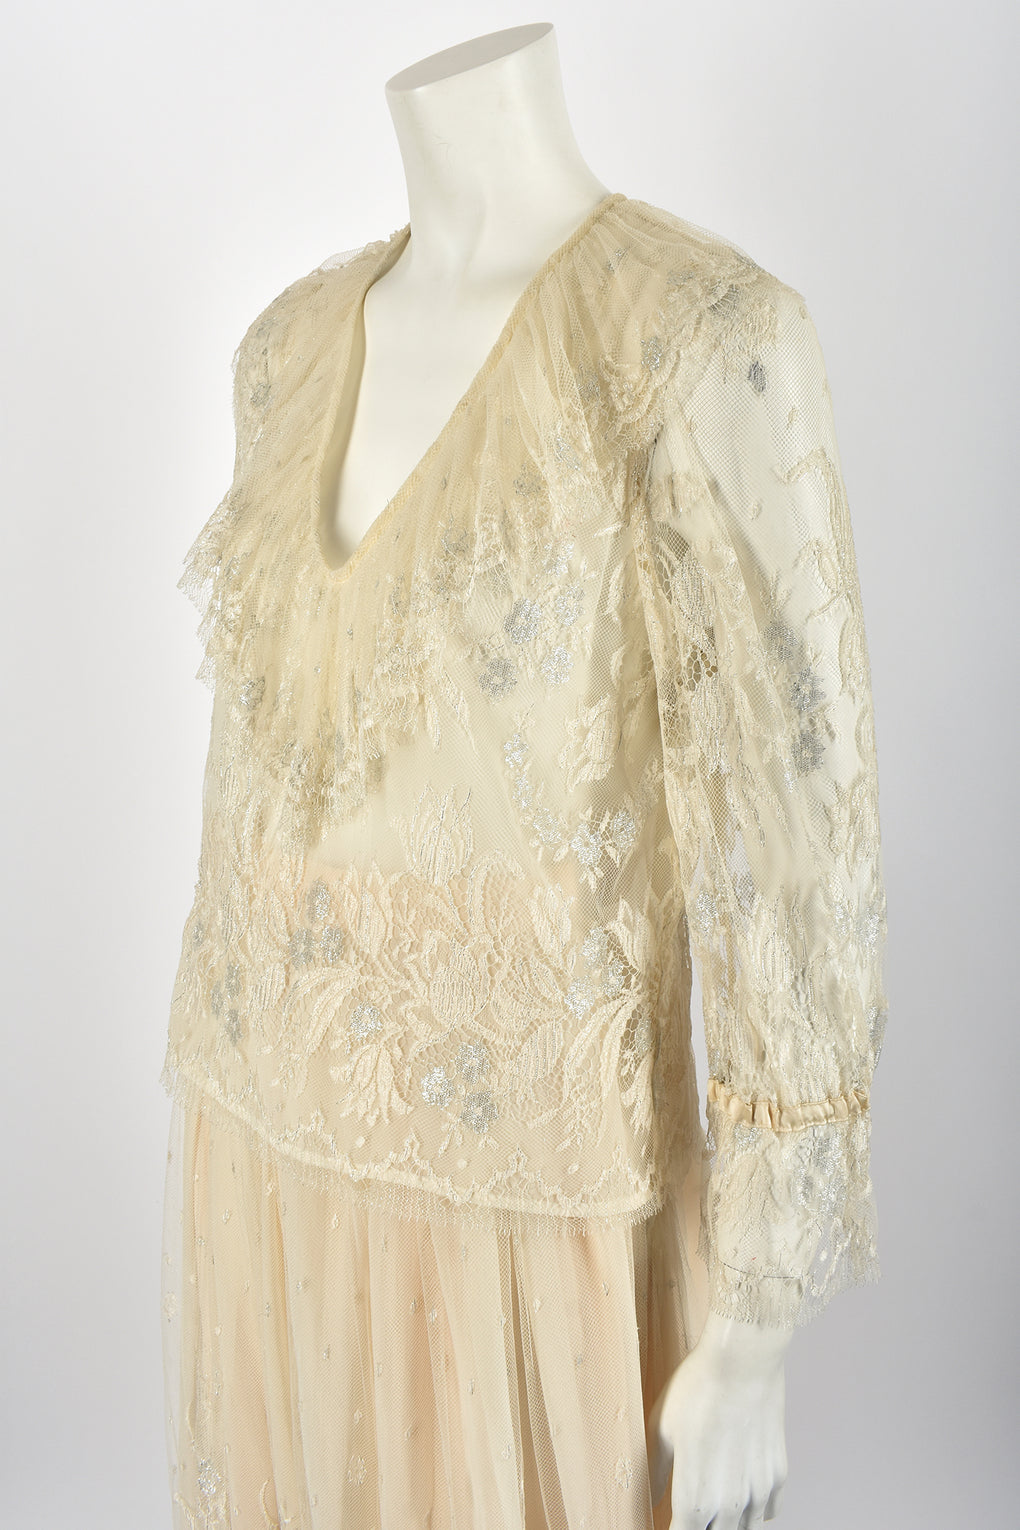 CAROLINE CHARLES lace blouse and skirt set / S-M